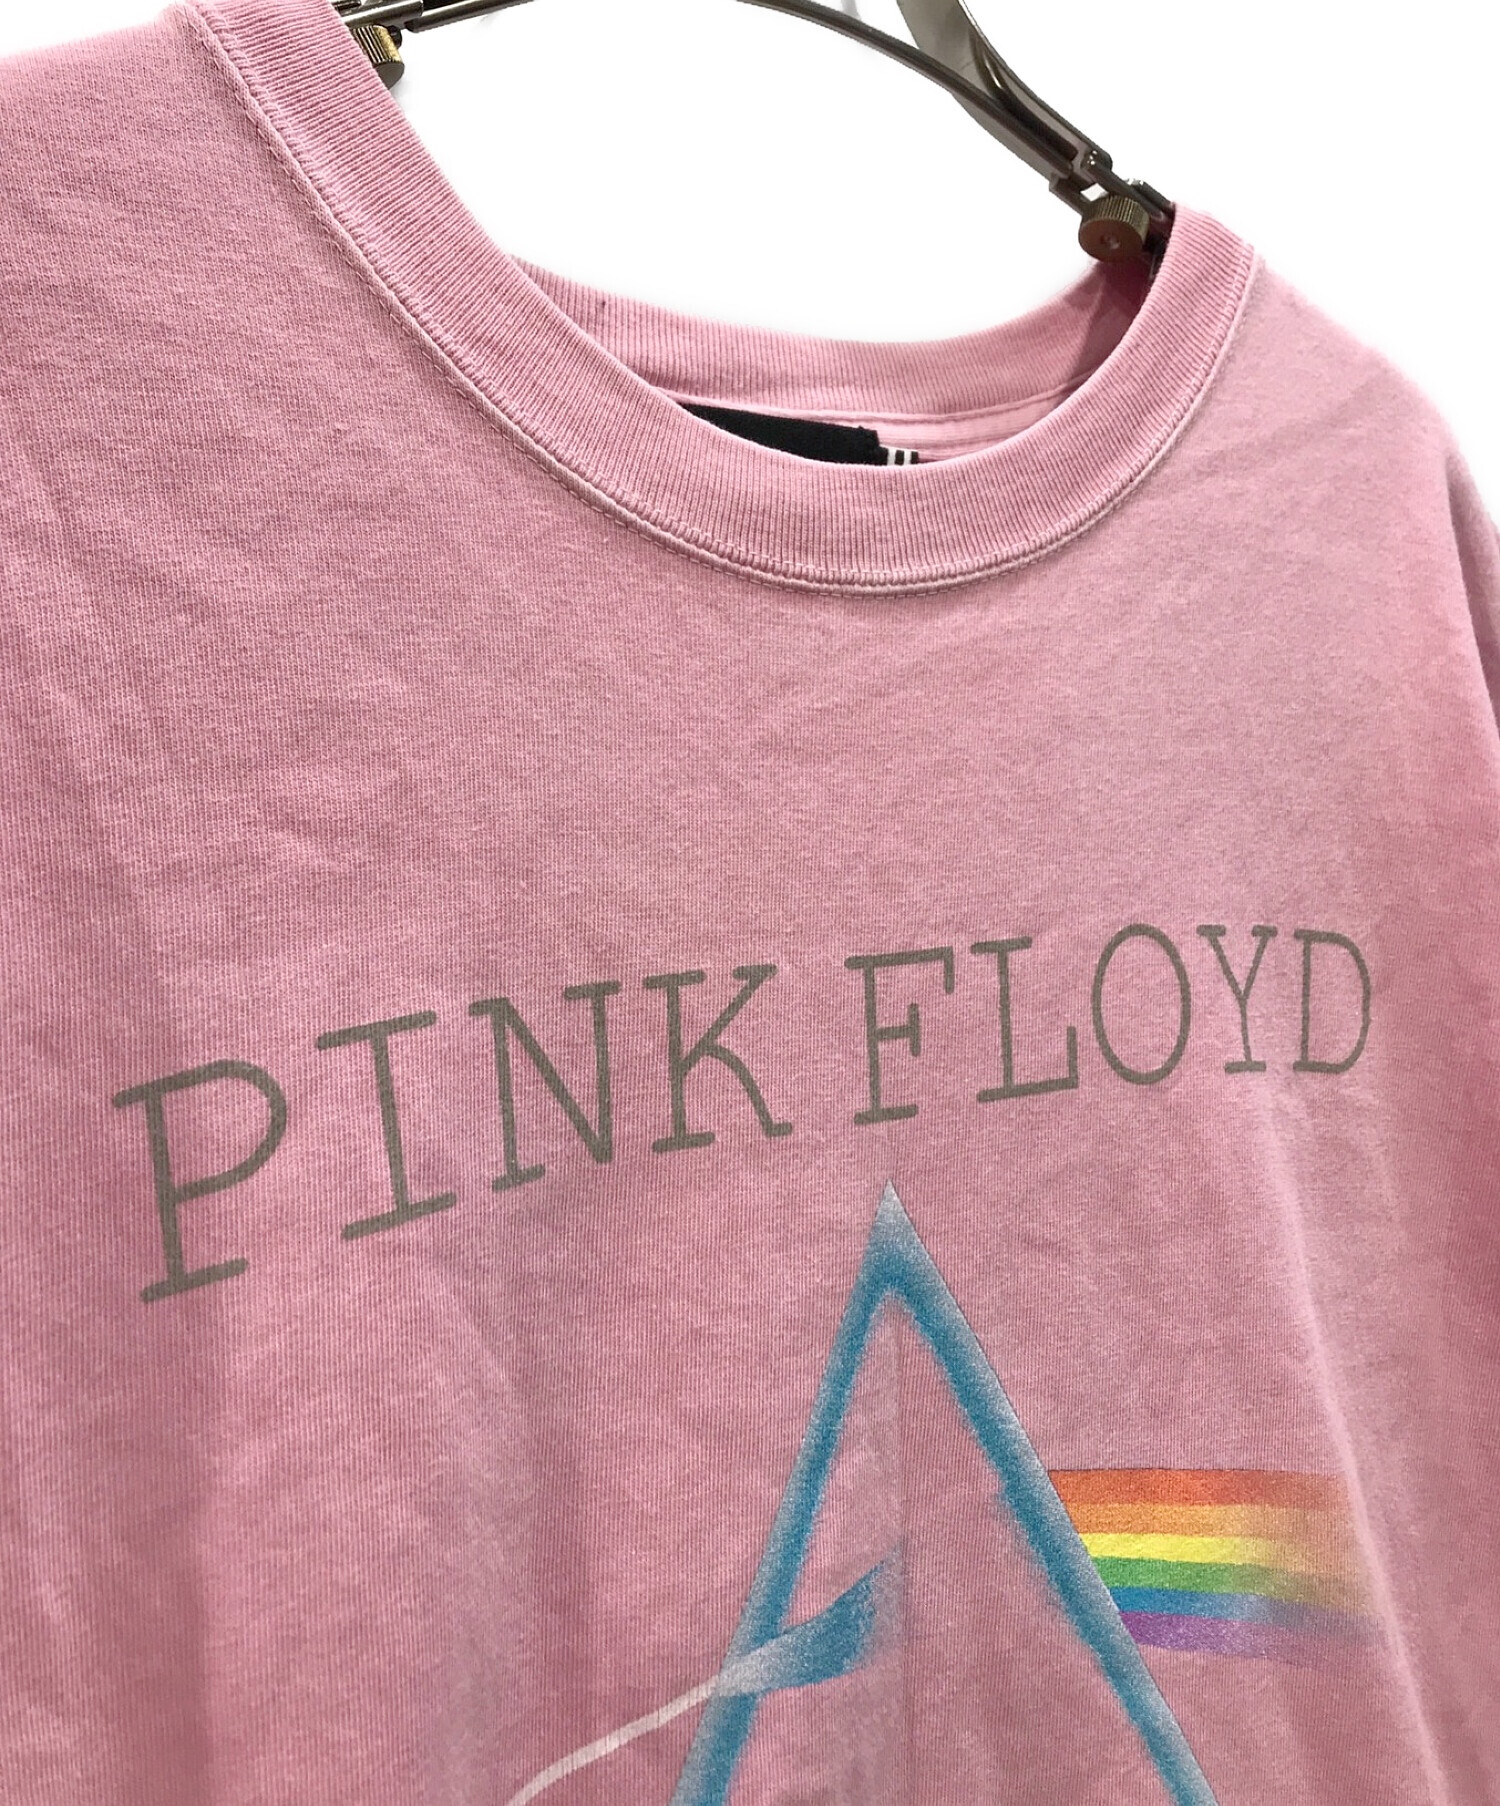 GOOD ROCK SPEED (グッドロックスピード) PINK FLOYD (ピンクフロイド) バンドTシャツ ピンク サイズ:F